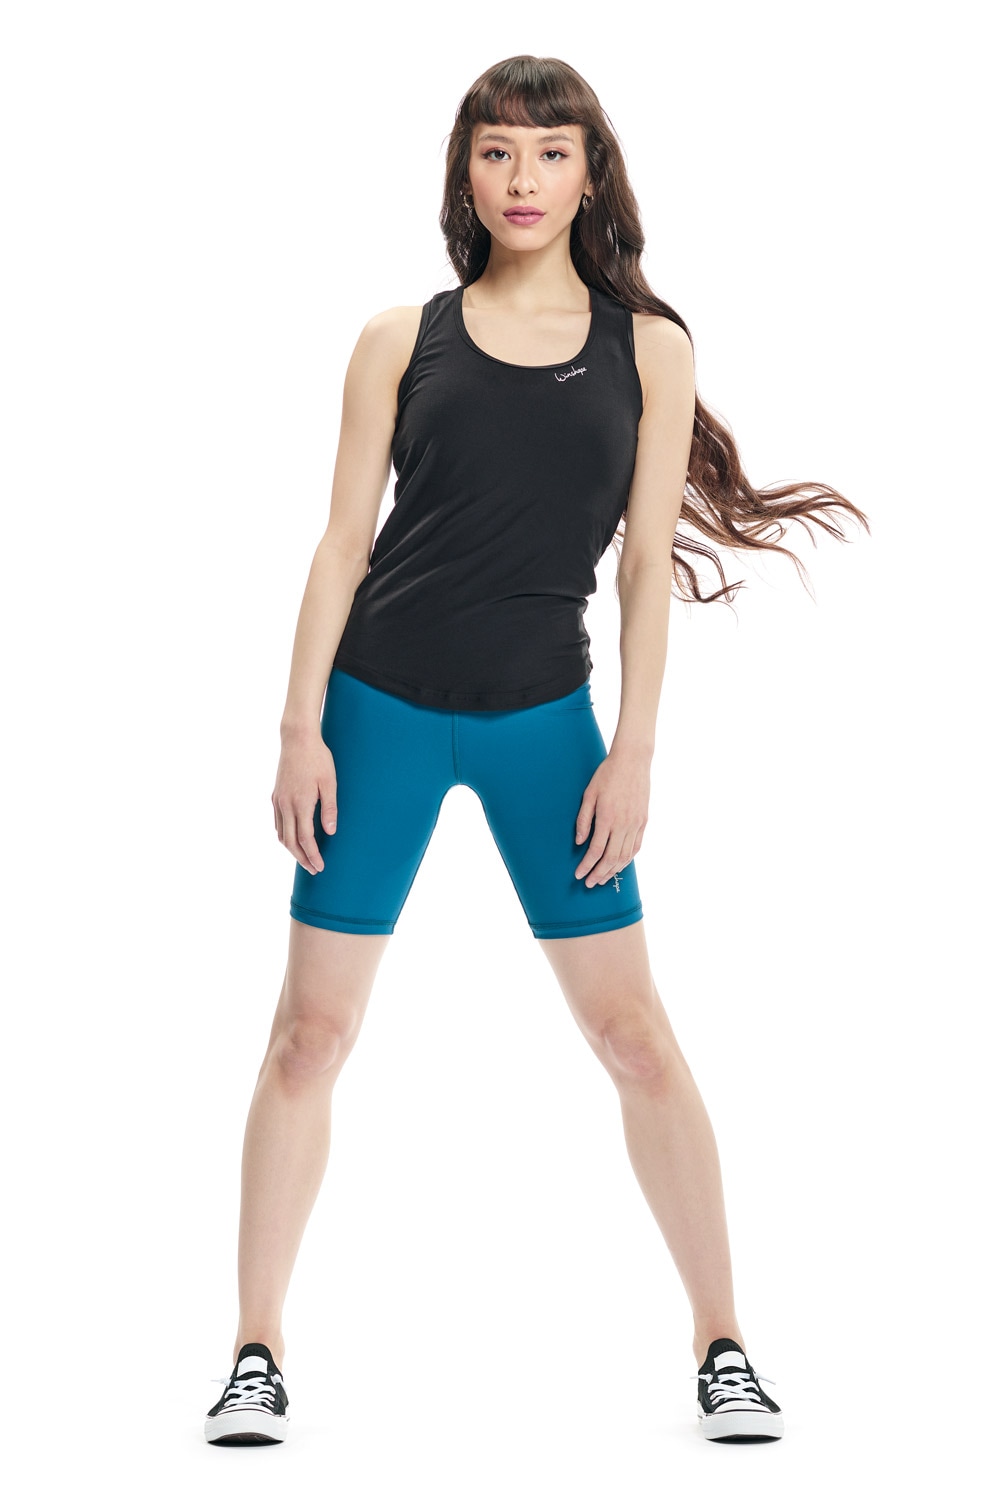 Winshape Shorts »Functional Comfort AEL412C«, Ultra weicher, elastischer Funktionsstoff